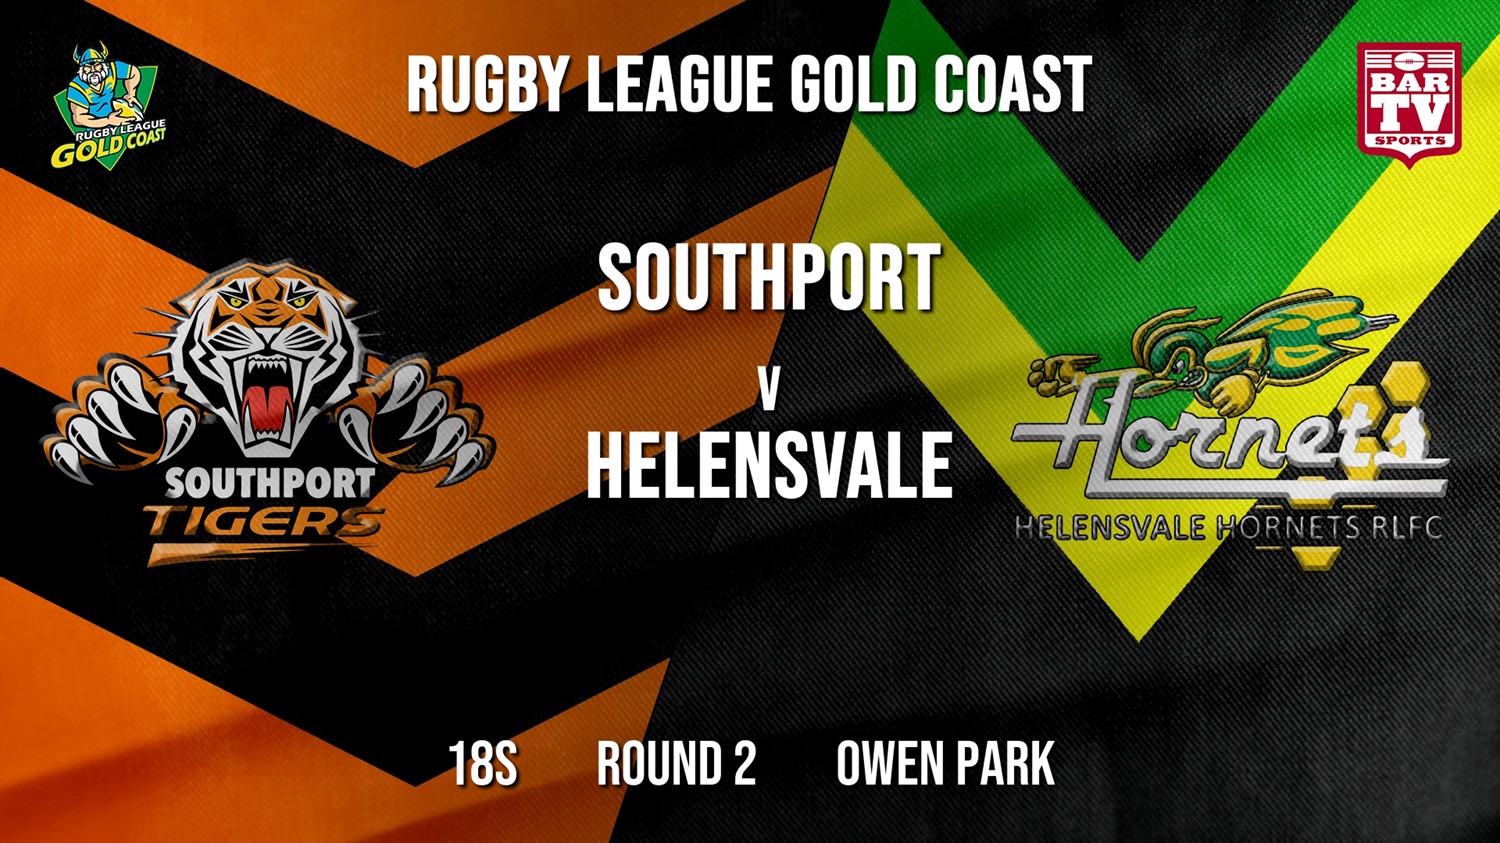 RLGC Round 2 - 18s - Southport Tigers v Helensvale Hornets Slate Image